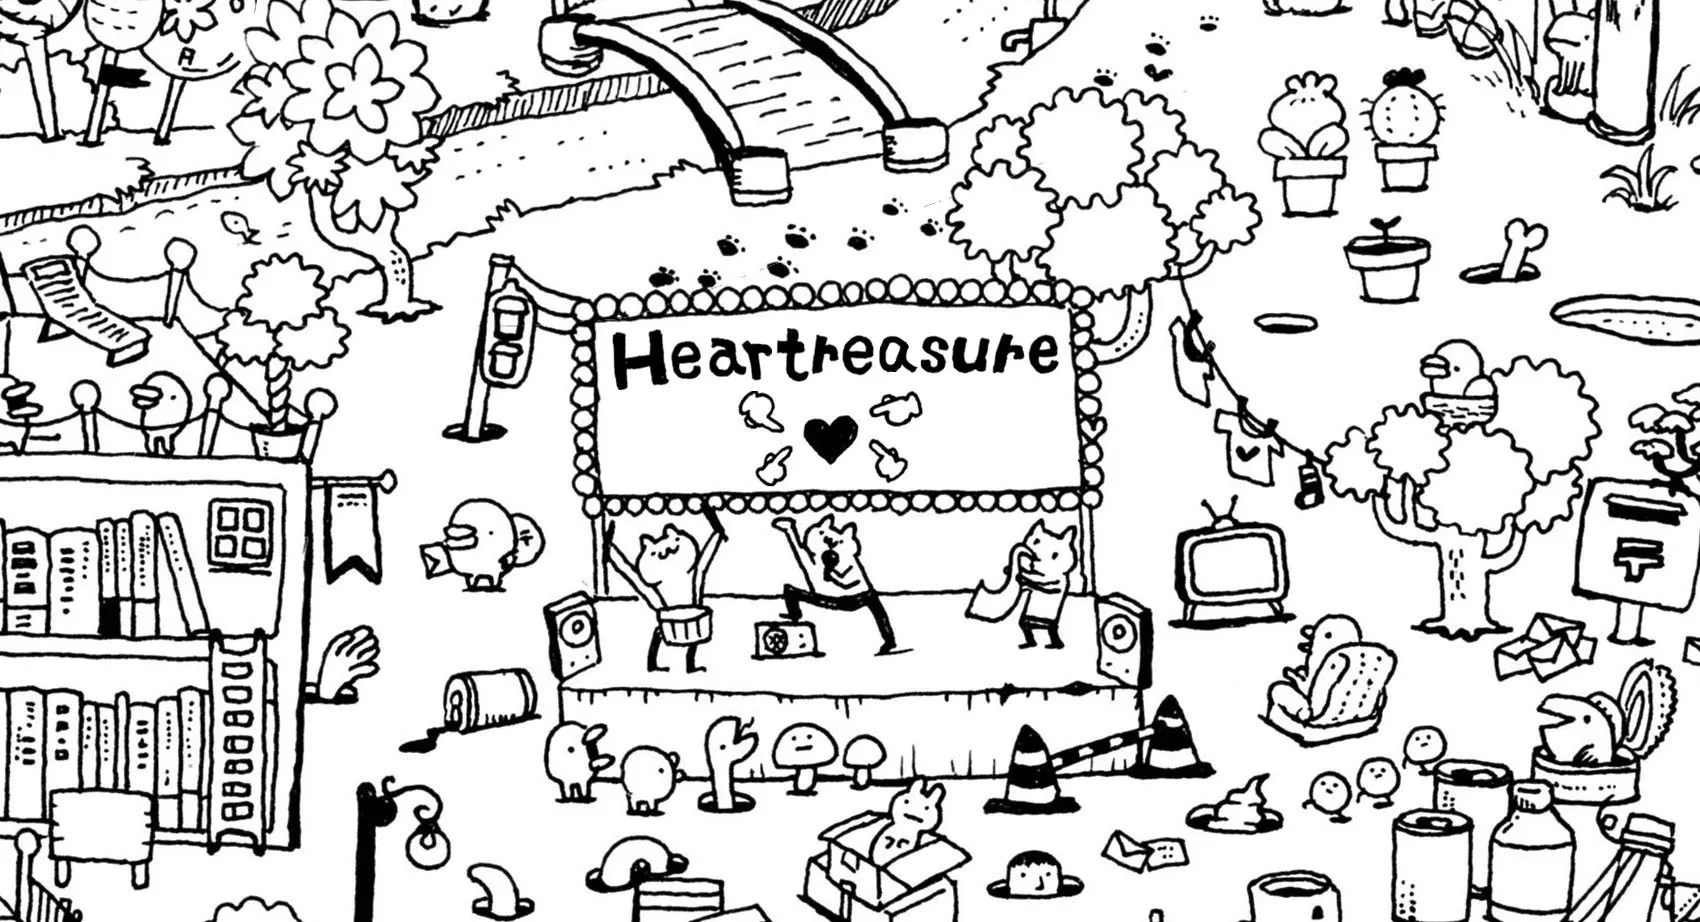 Heartreasure by nettaigyo